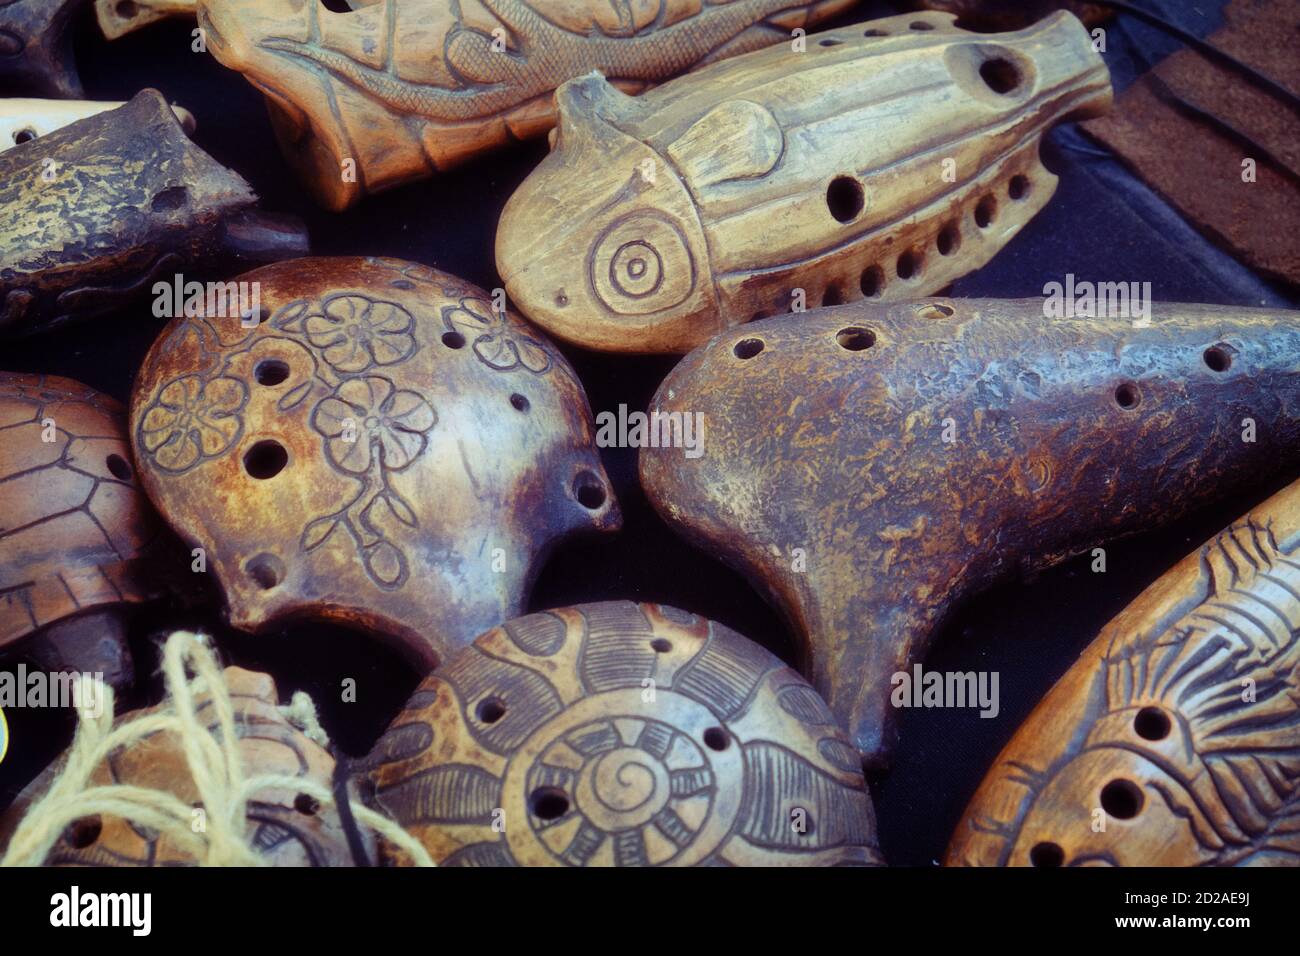 Ocarina, Pfeife - Blasinstrument, Art Pfeife-Gefäßflöte. Es gibt Steingut,  Porzellan und hölzerne Ocarinas Stockfotografie - Alamy